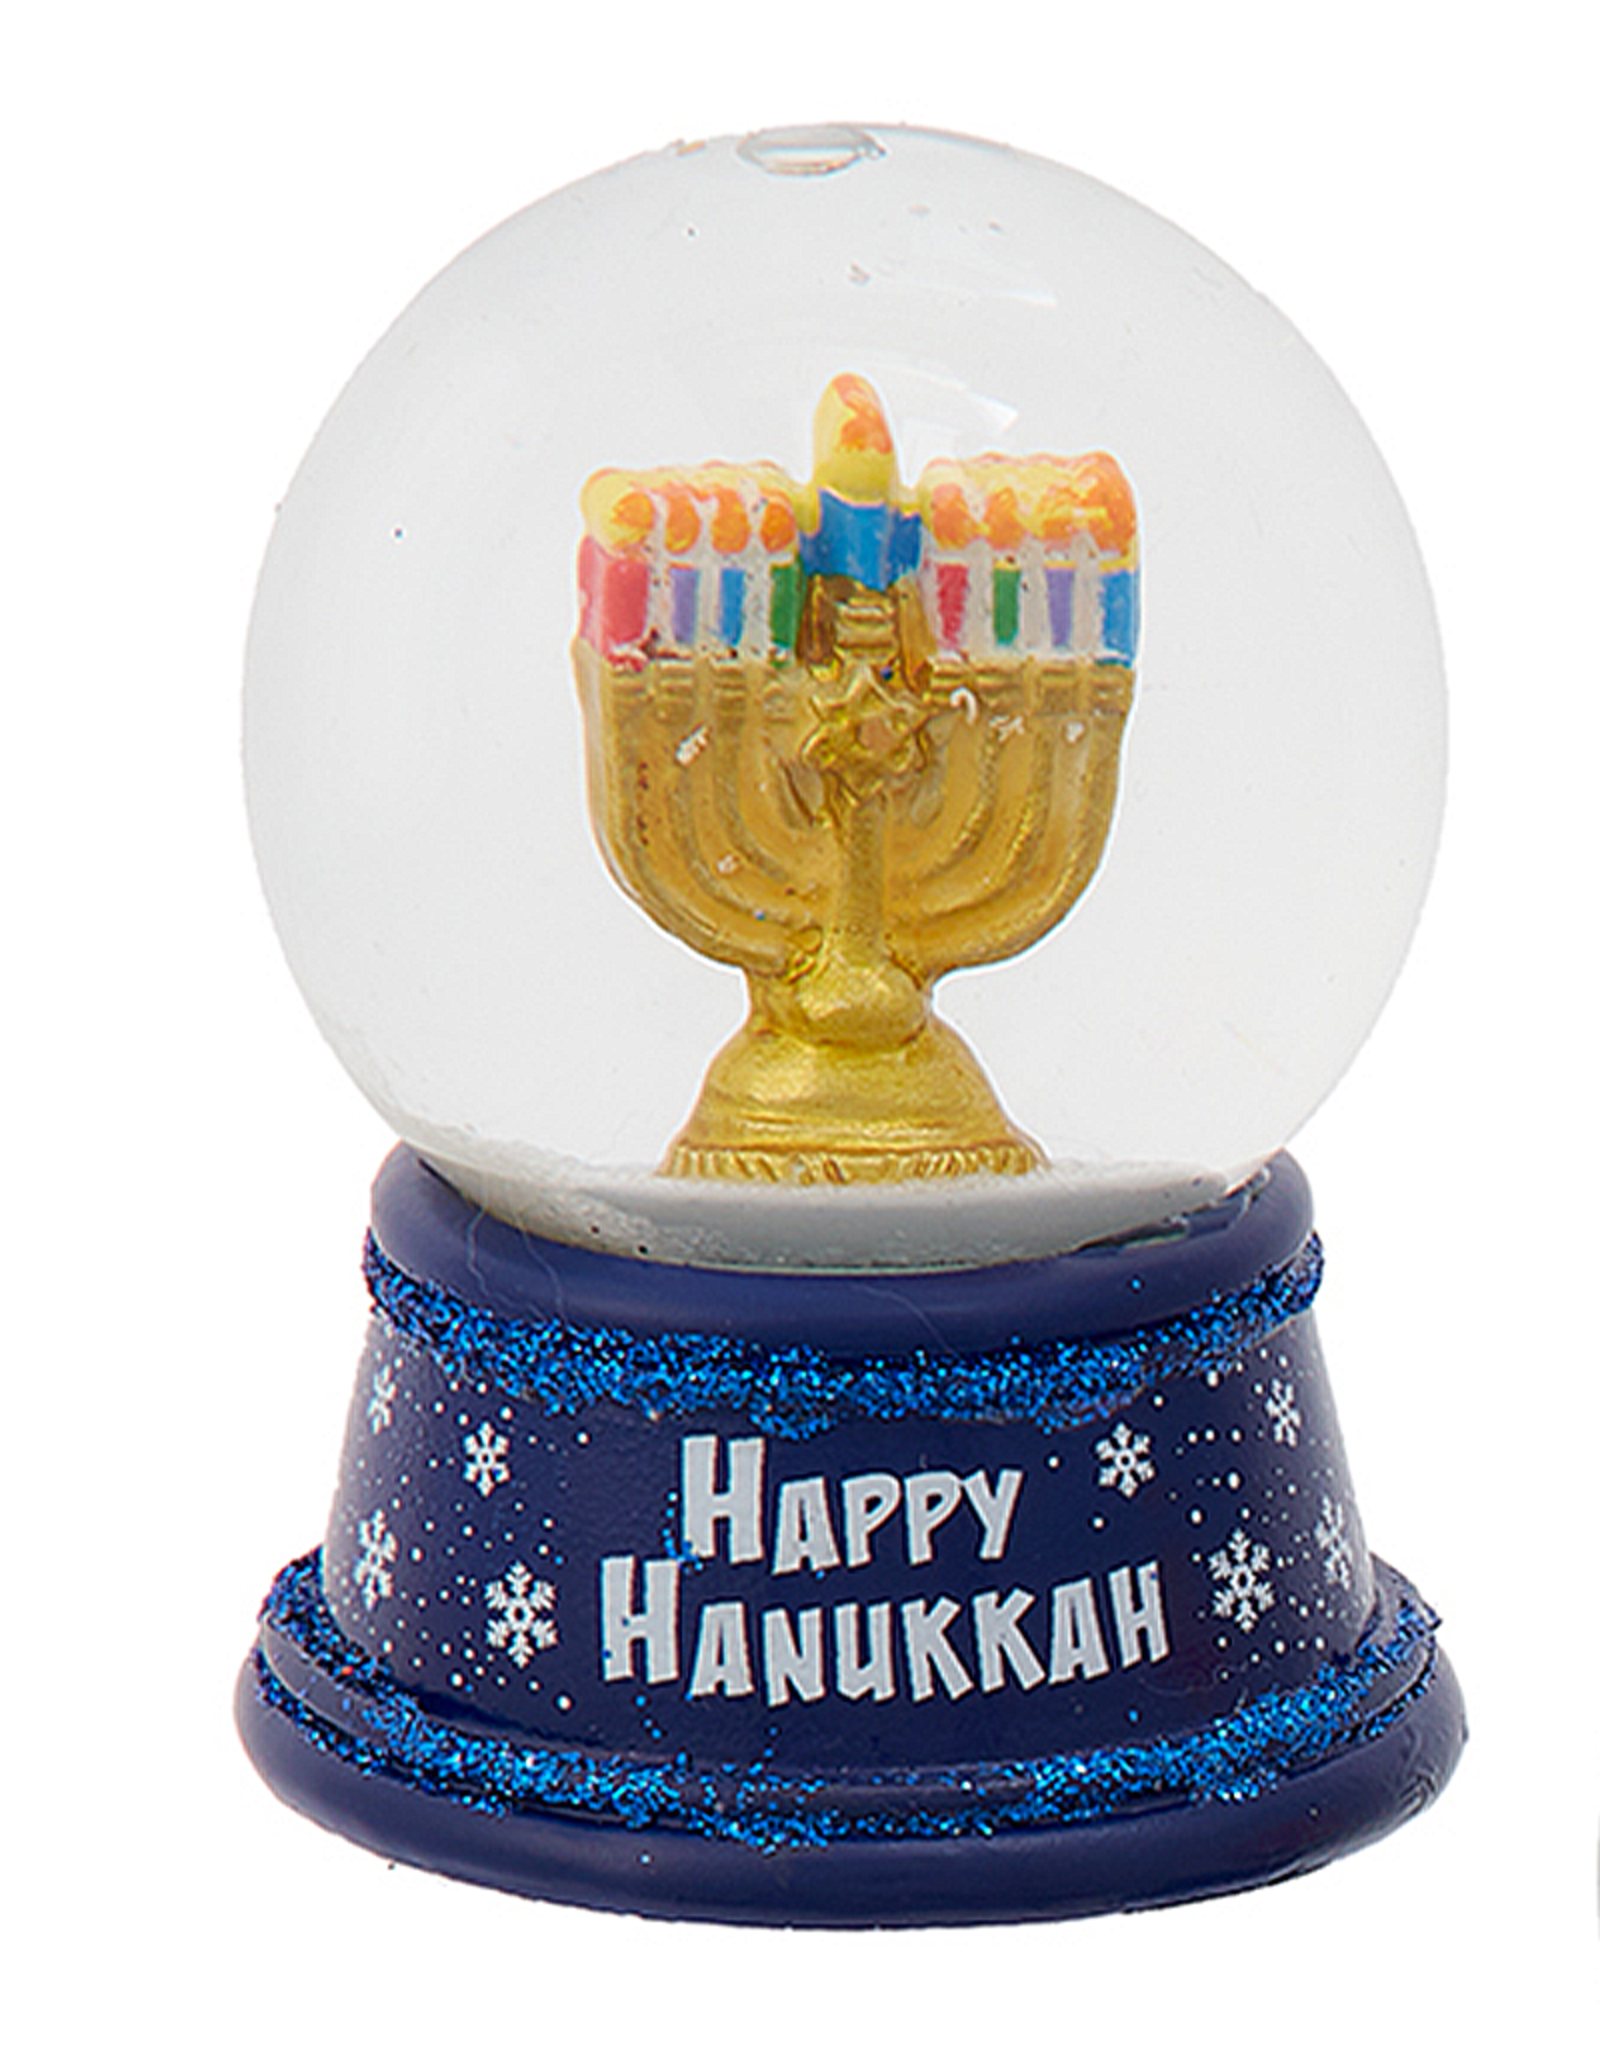 Kurt Adler Happy Hanukkah Snow Globe 45mm Menorah Water Globe